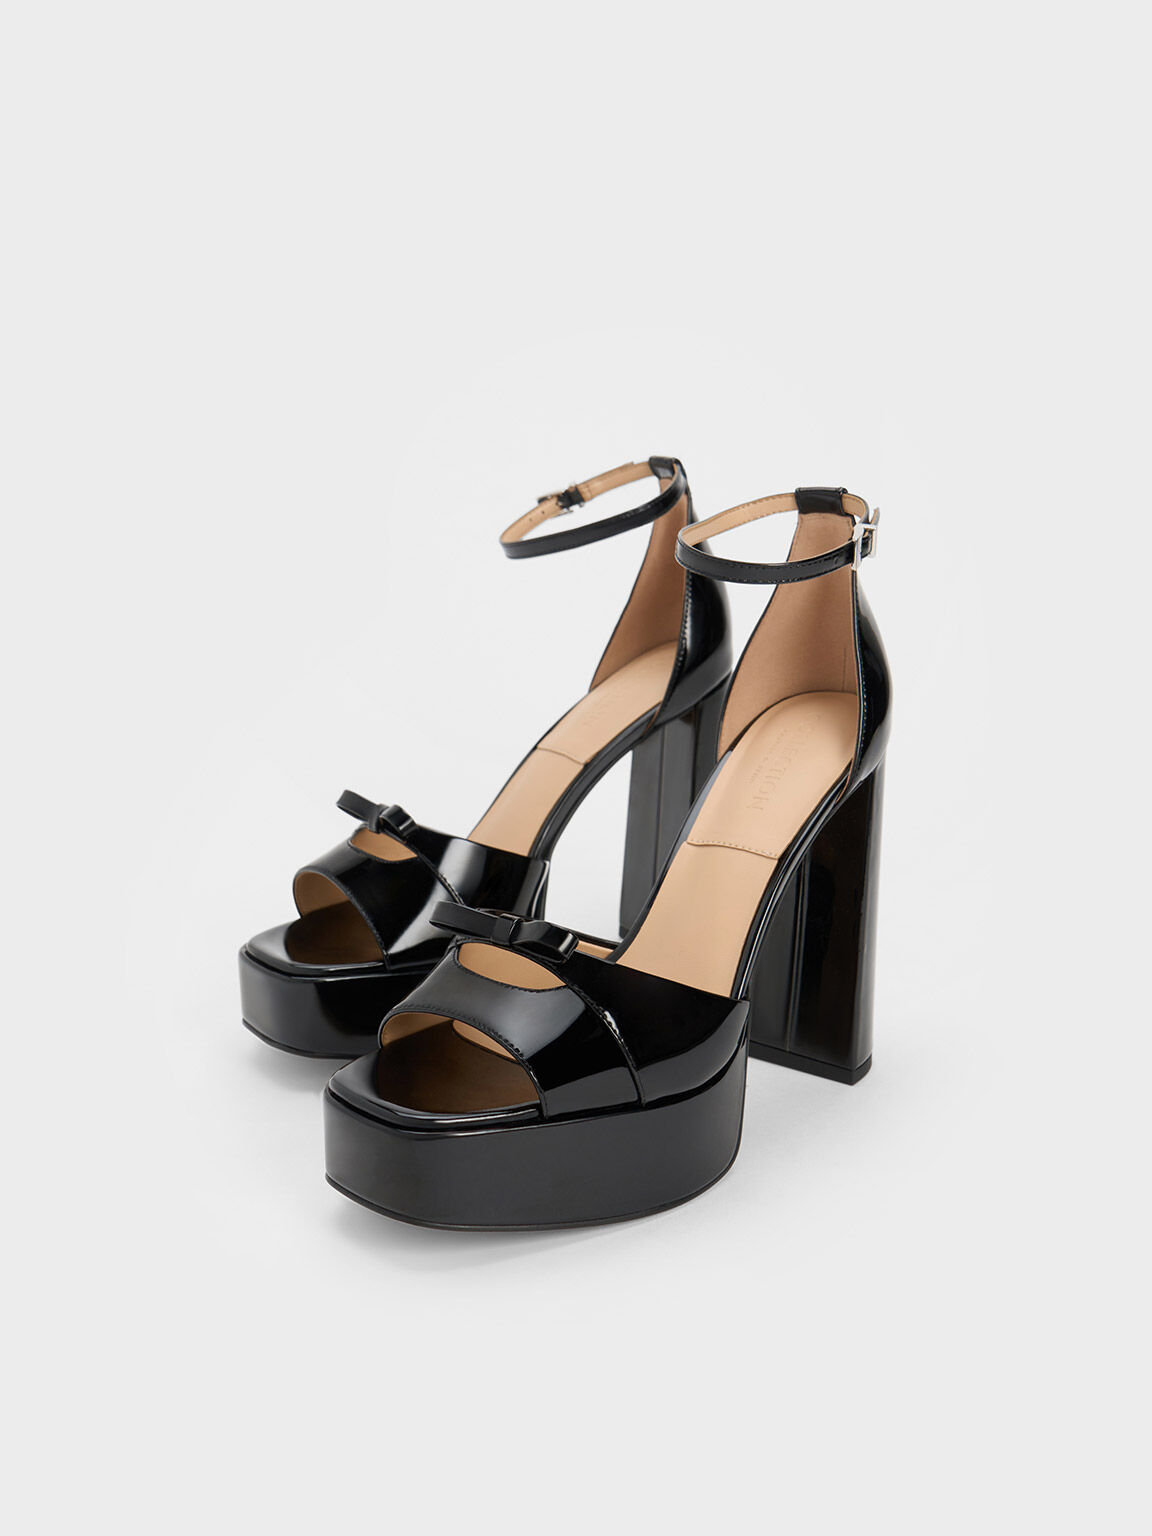 Sandal Platform Patent Leather Verona, Black, hi-res